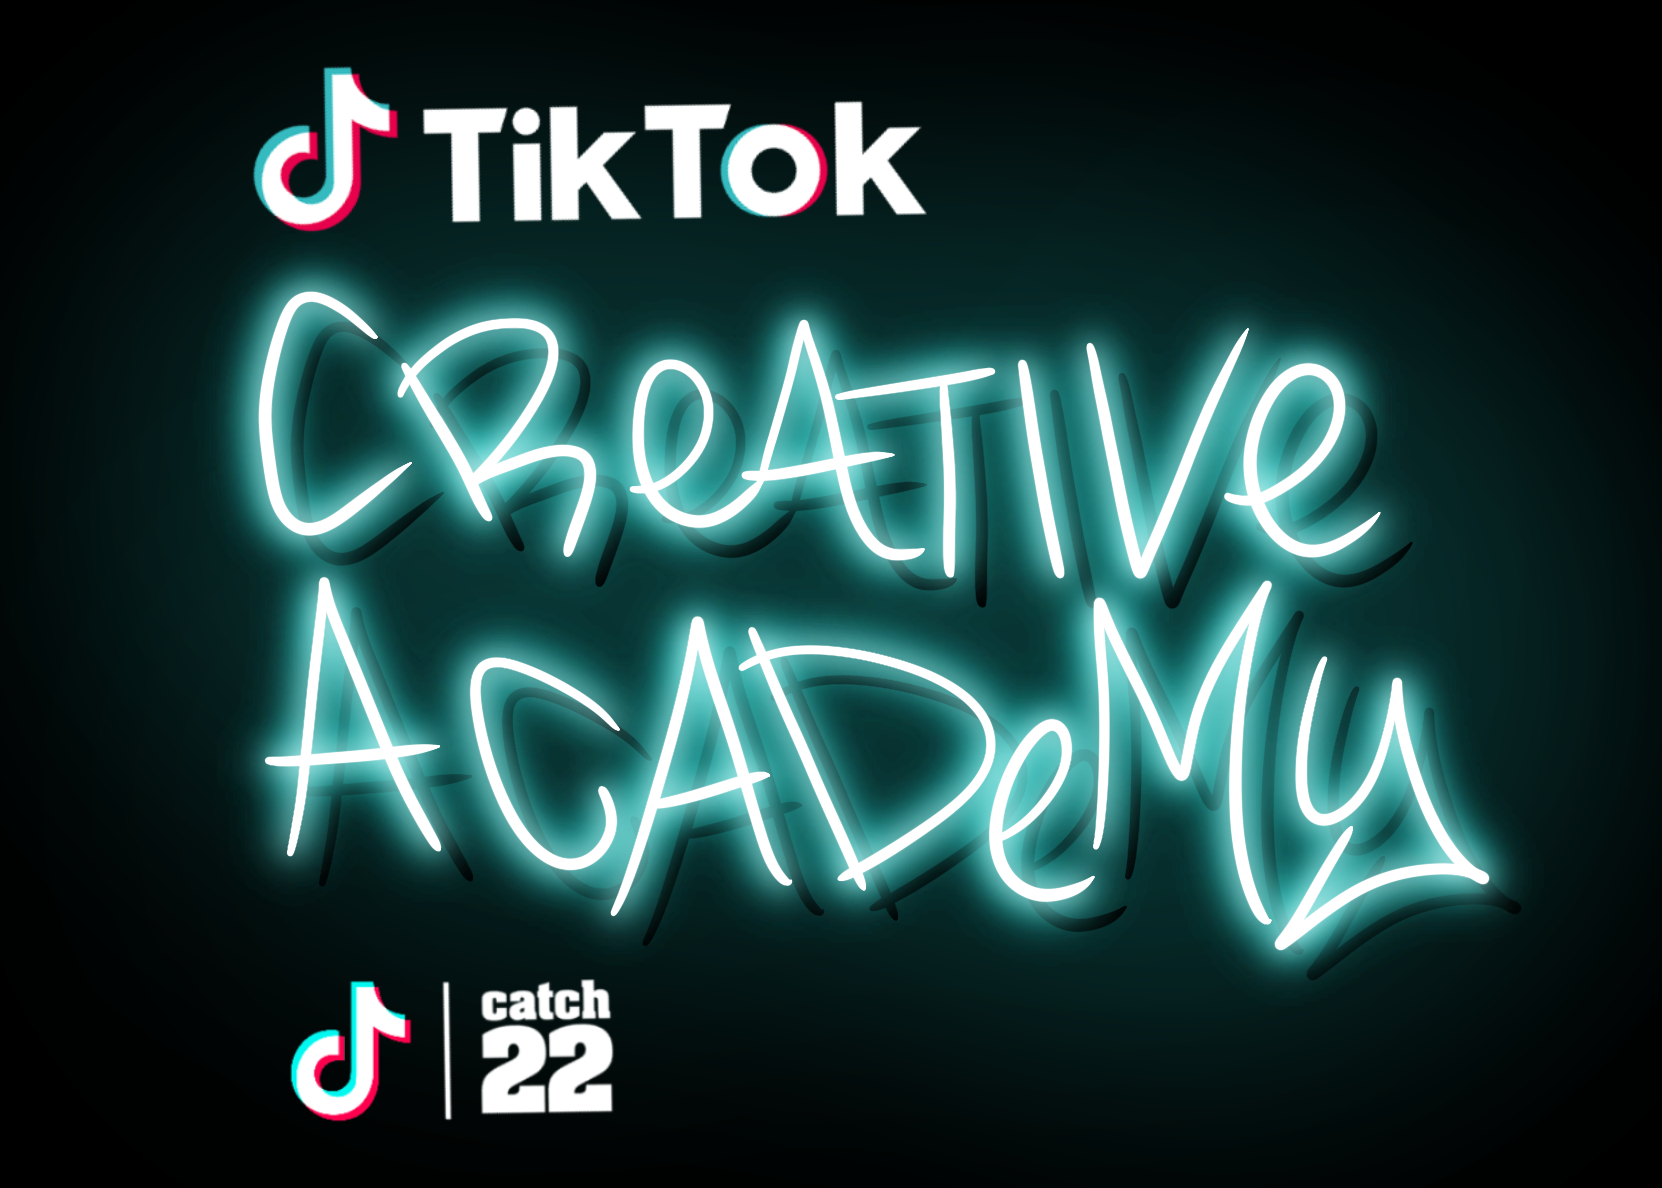 TikTok Creative Academy service logo